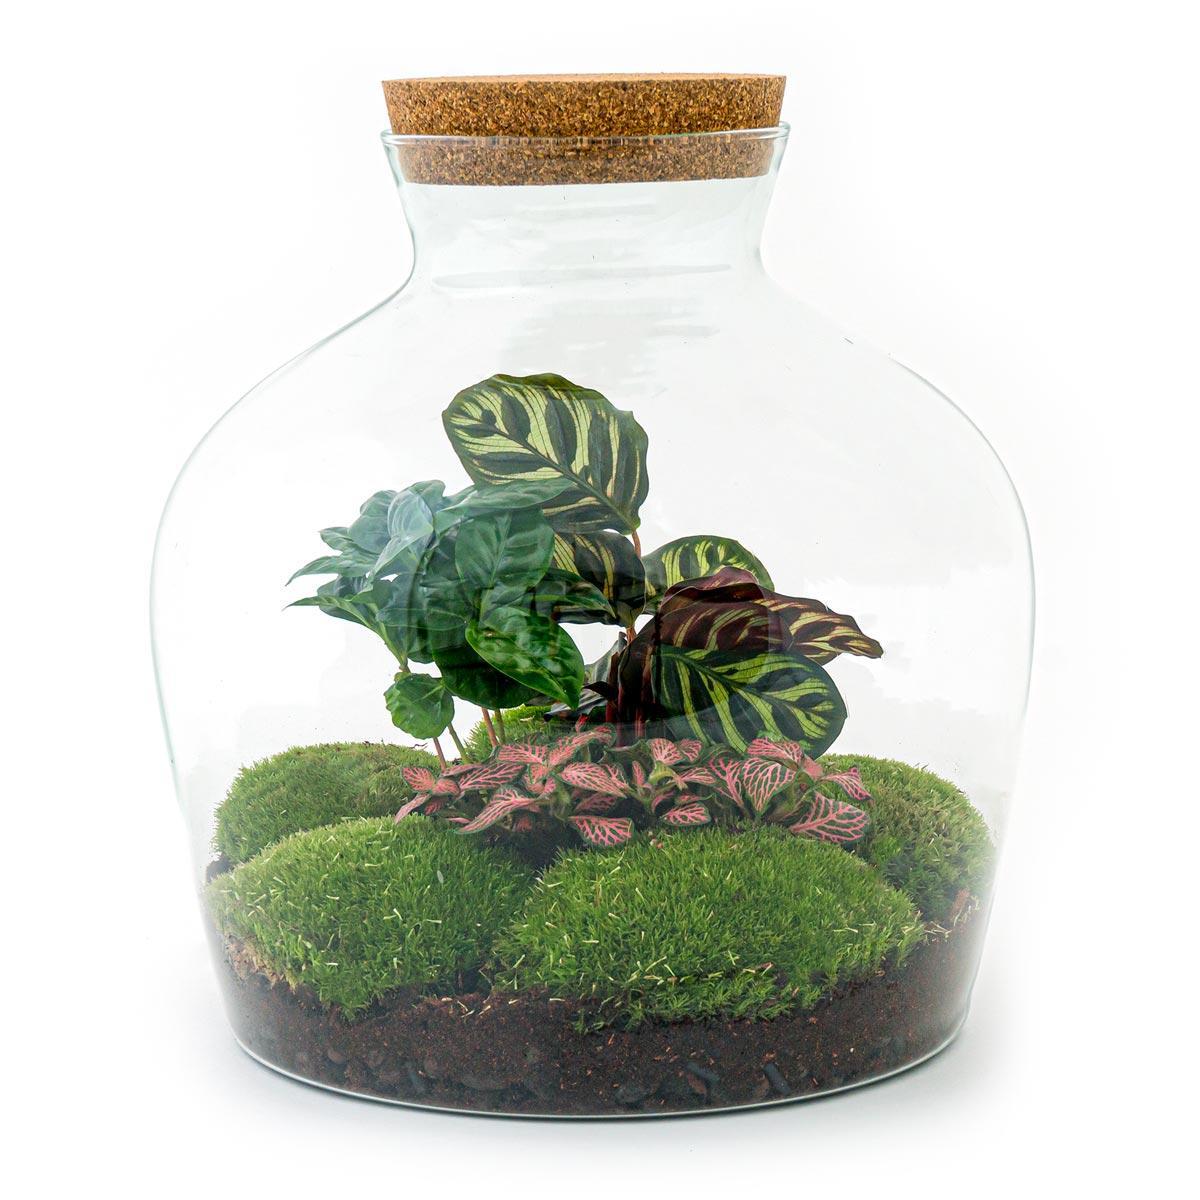 Livraison plante Kit Terrarium DIY - JOY